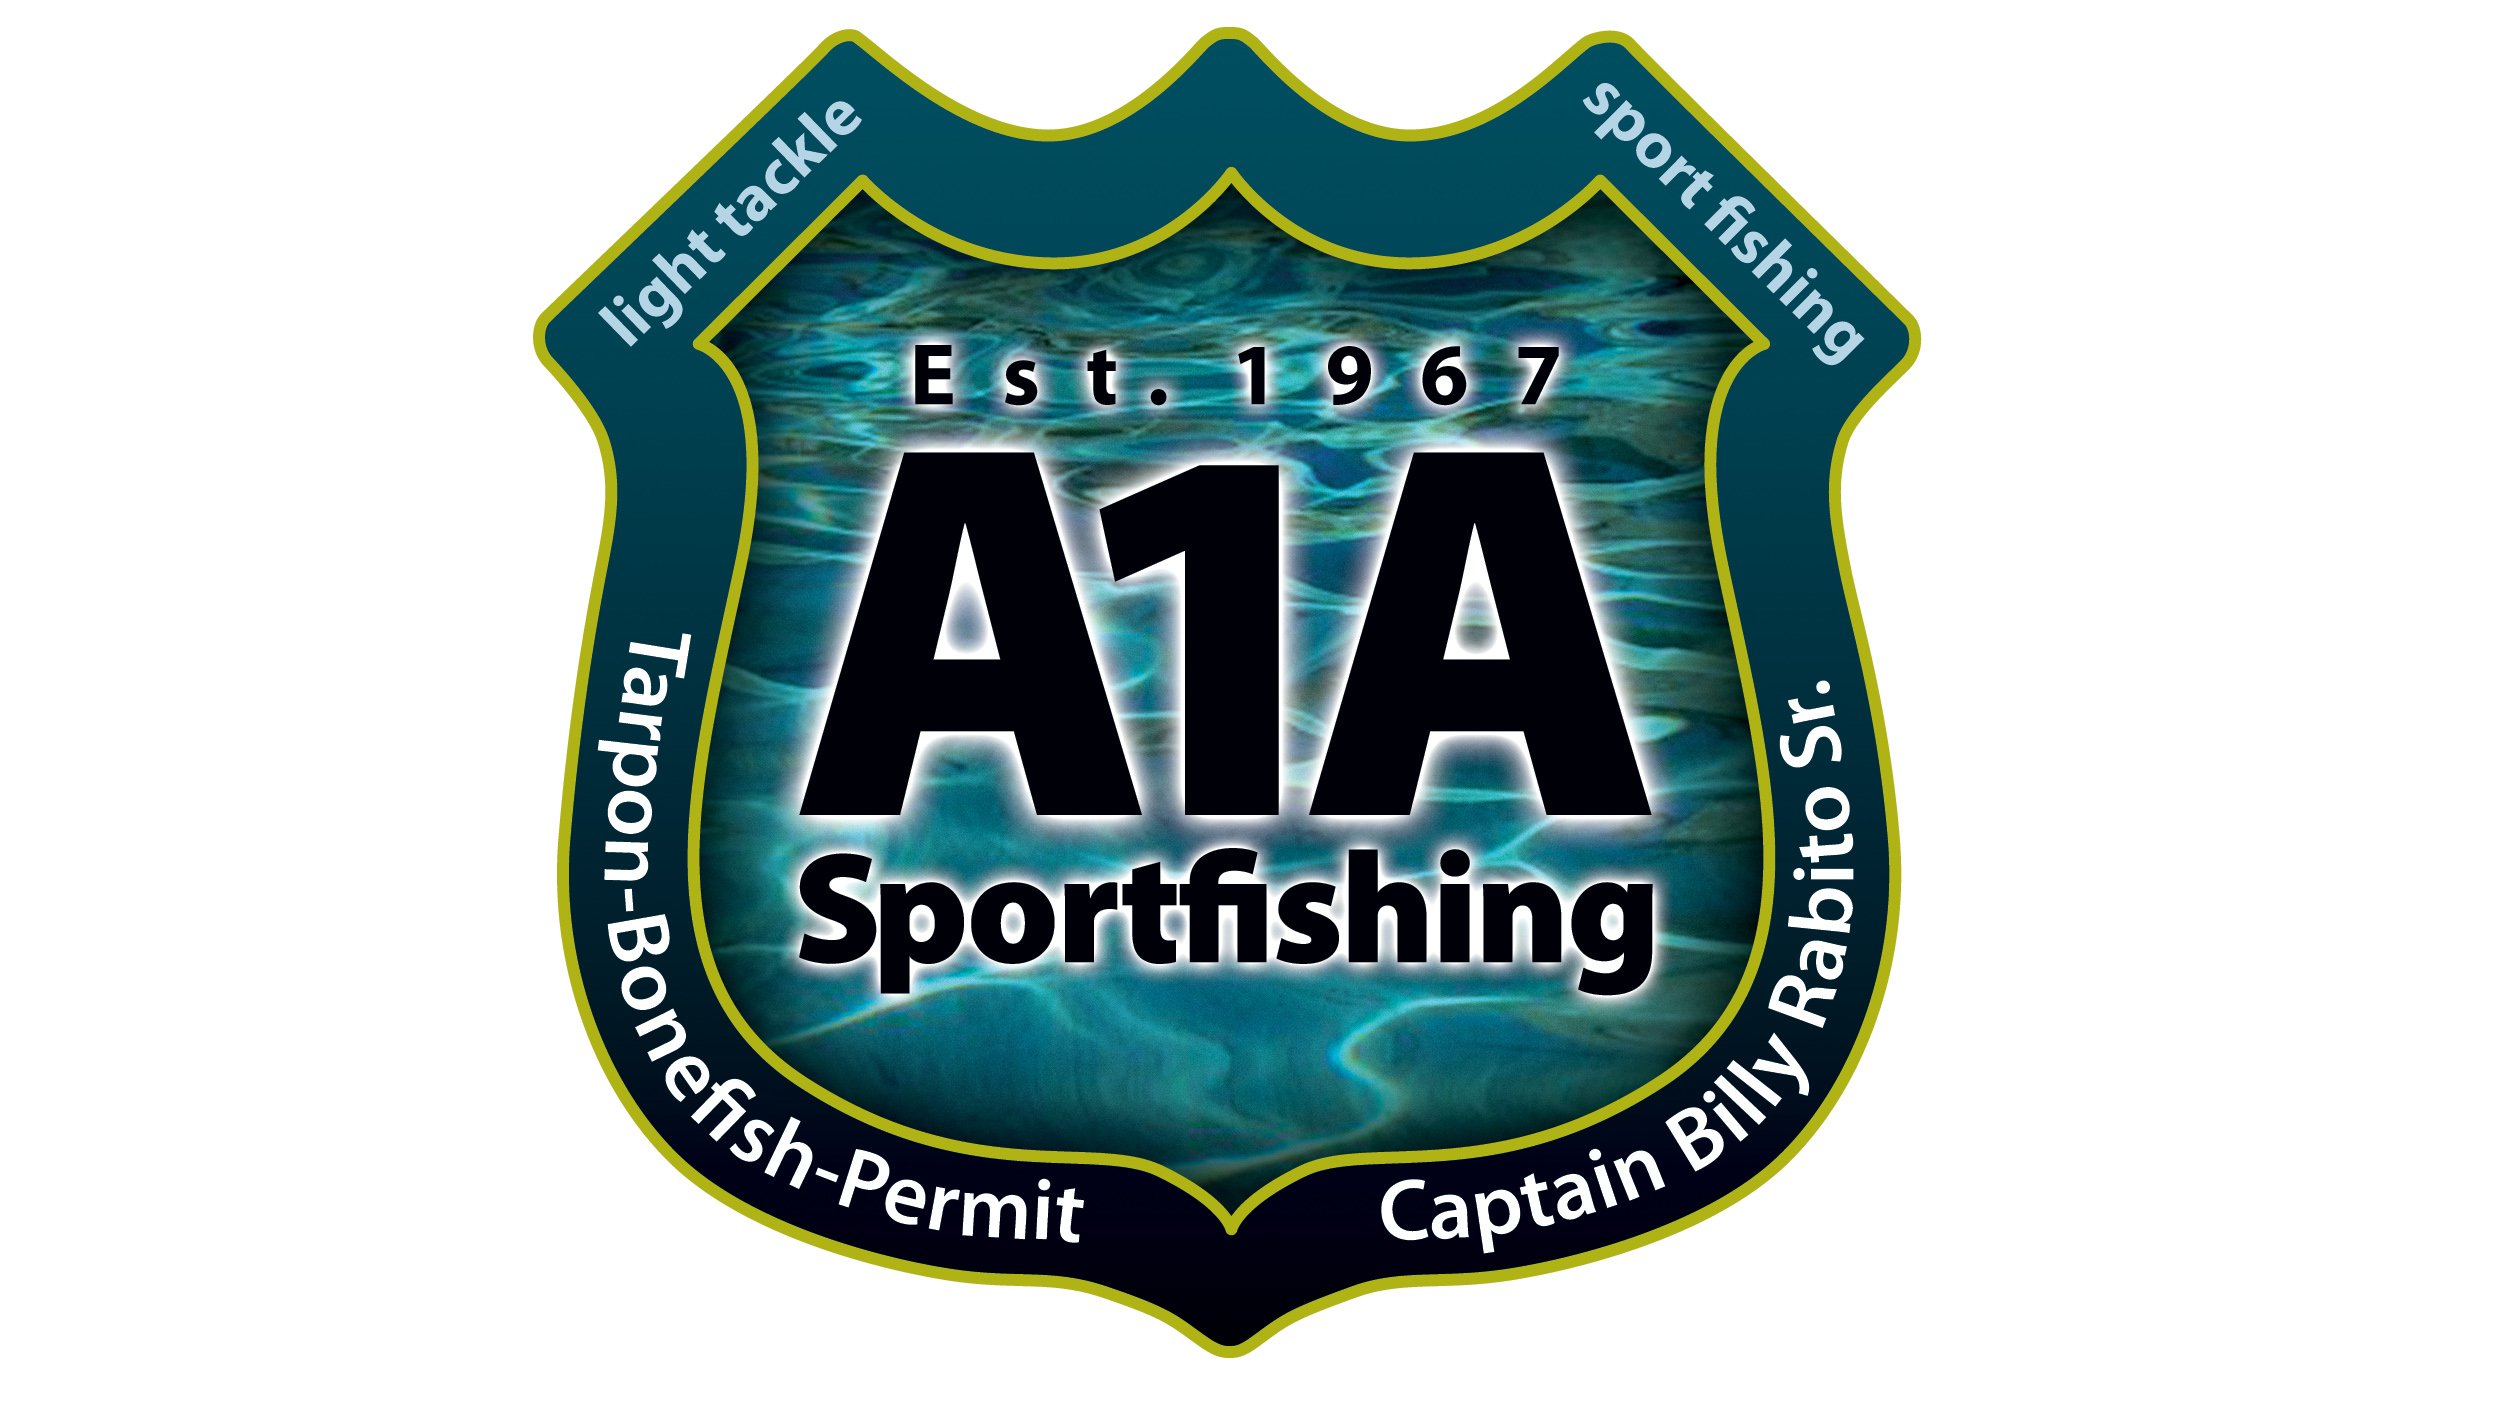 Logos-Brand-Identity-A1A-sportfishing.jpg